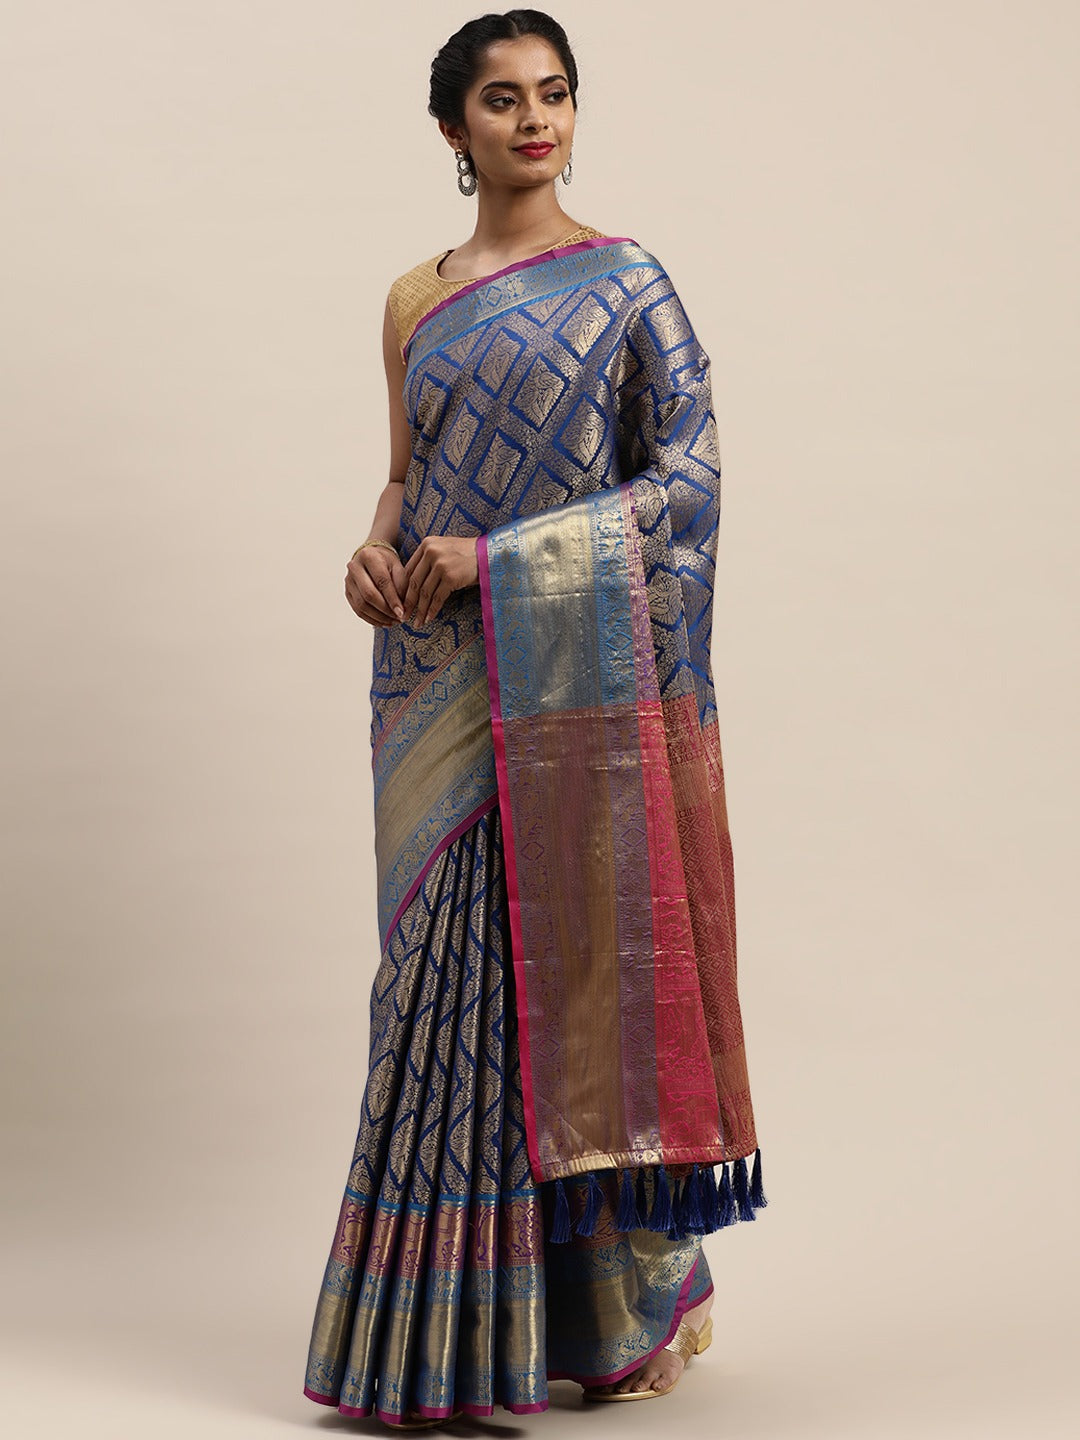  Banarasi Silk Cotton Saree in Royal Blue Colour